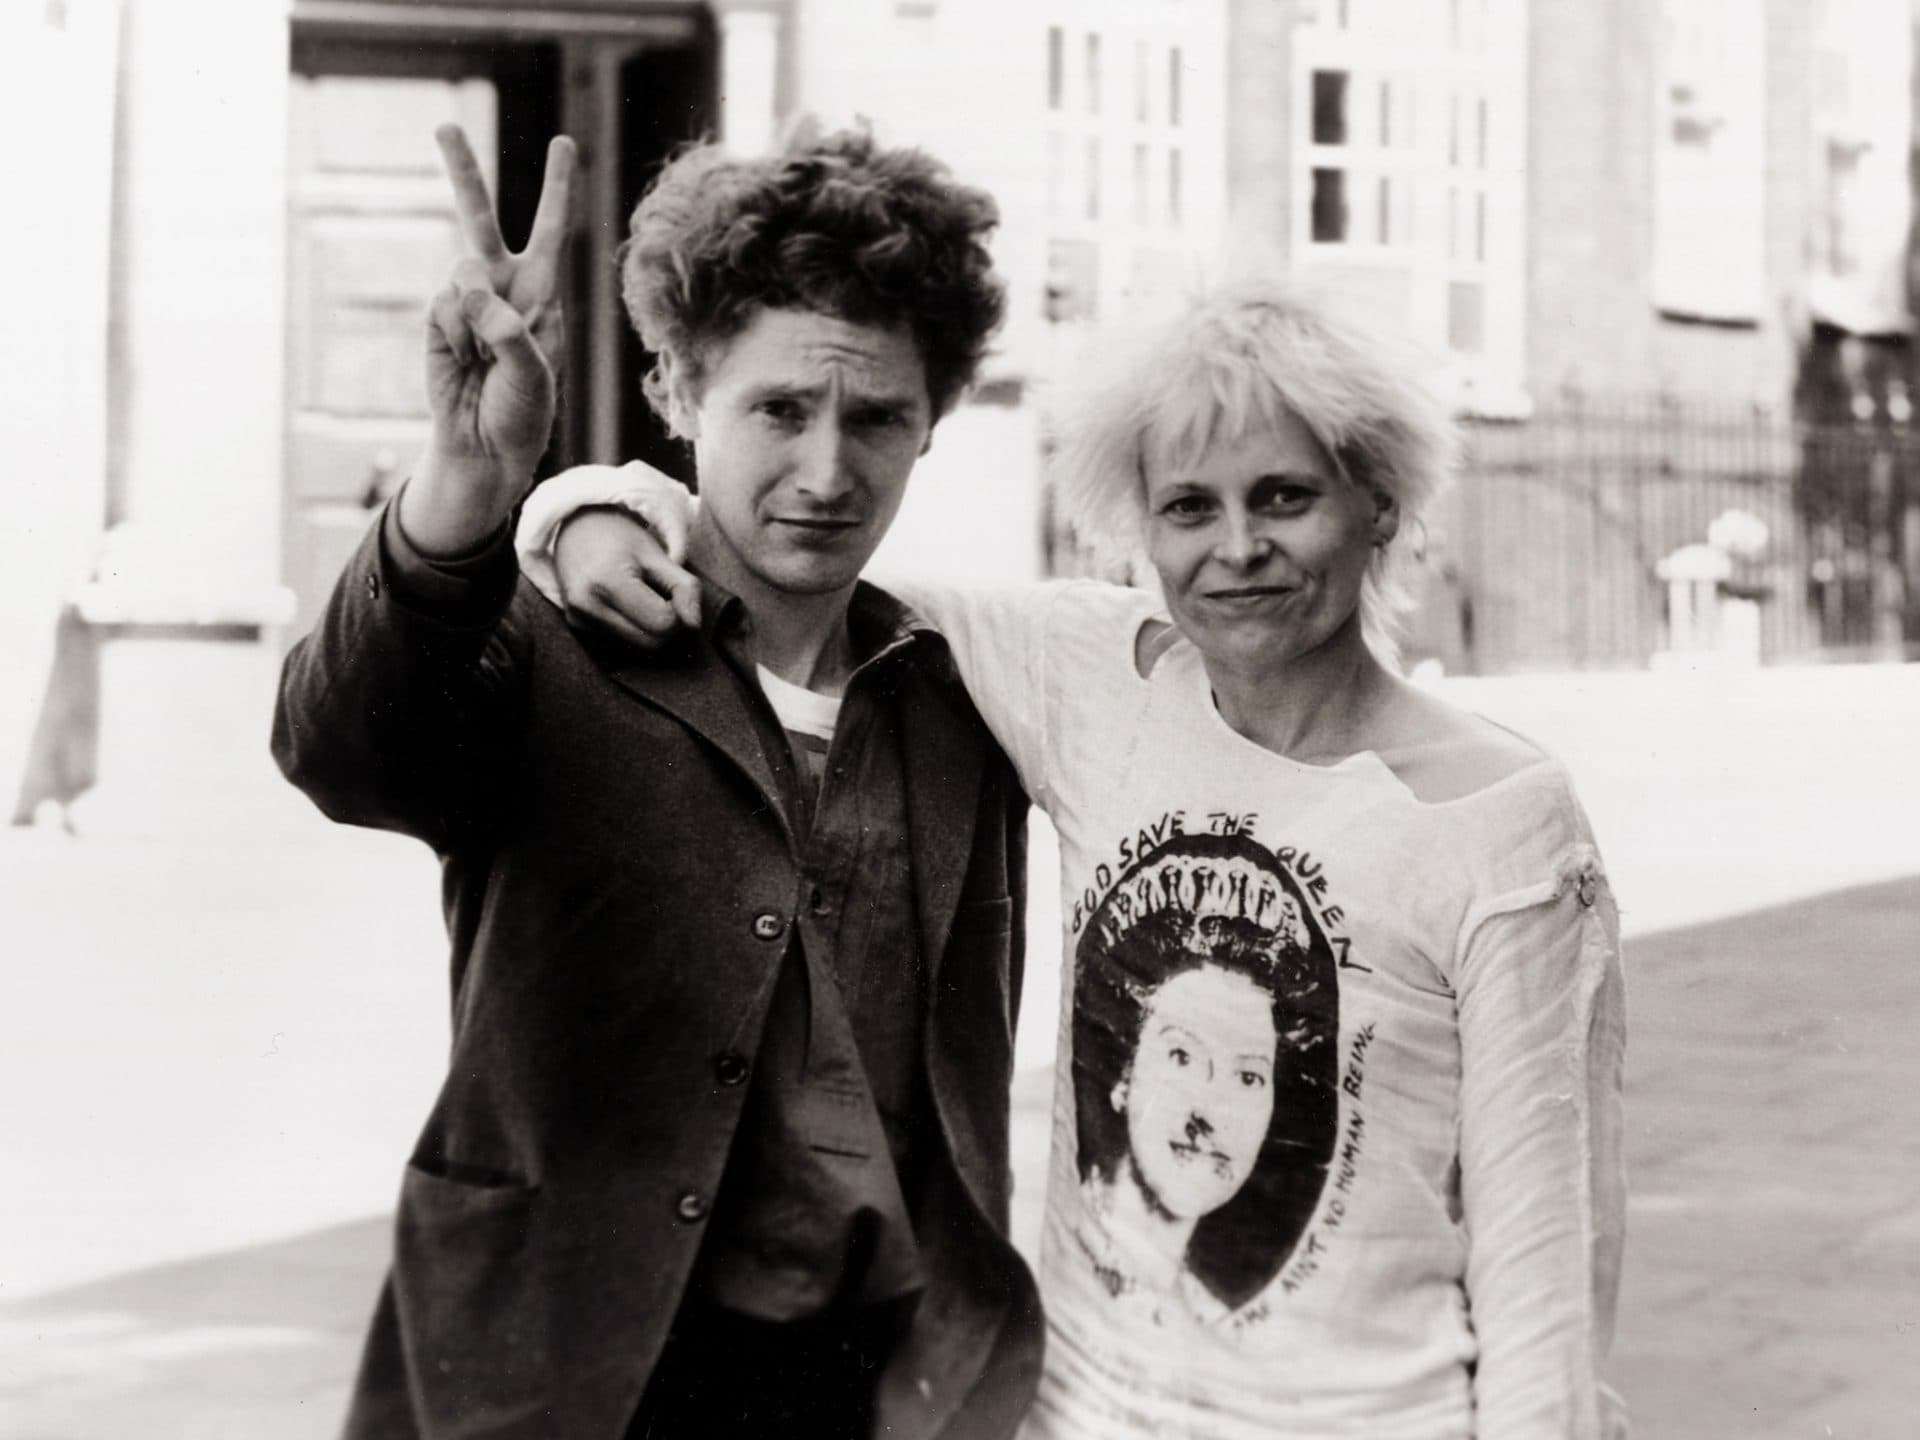 Vivienne Westwood Wear a God Save the Queen Slogan T-shirt Worn by Malcolm McClaren 